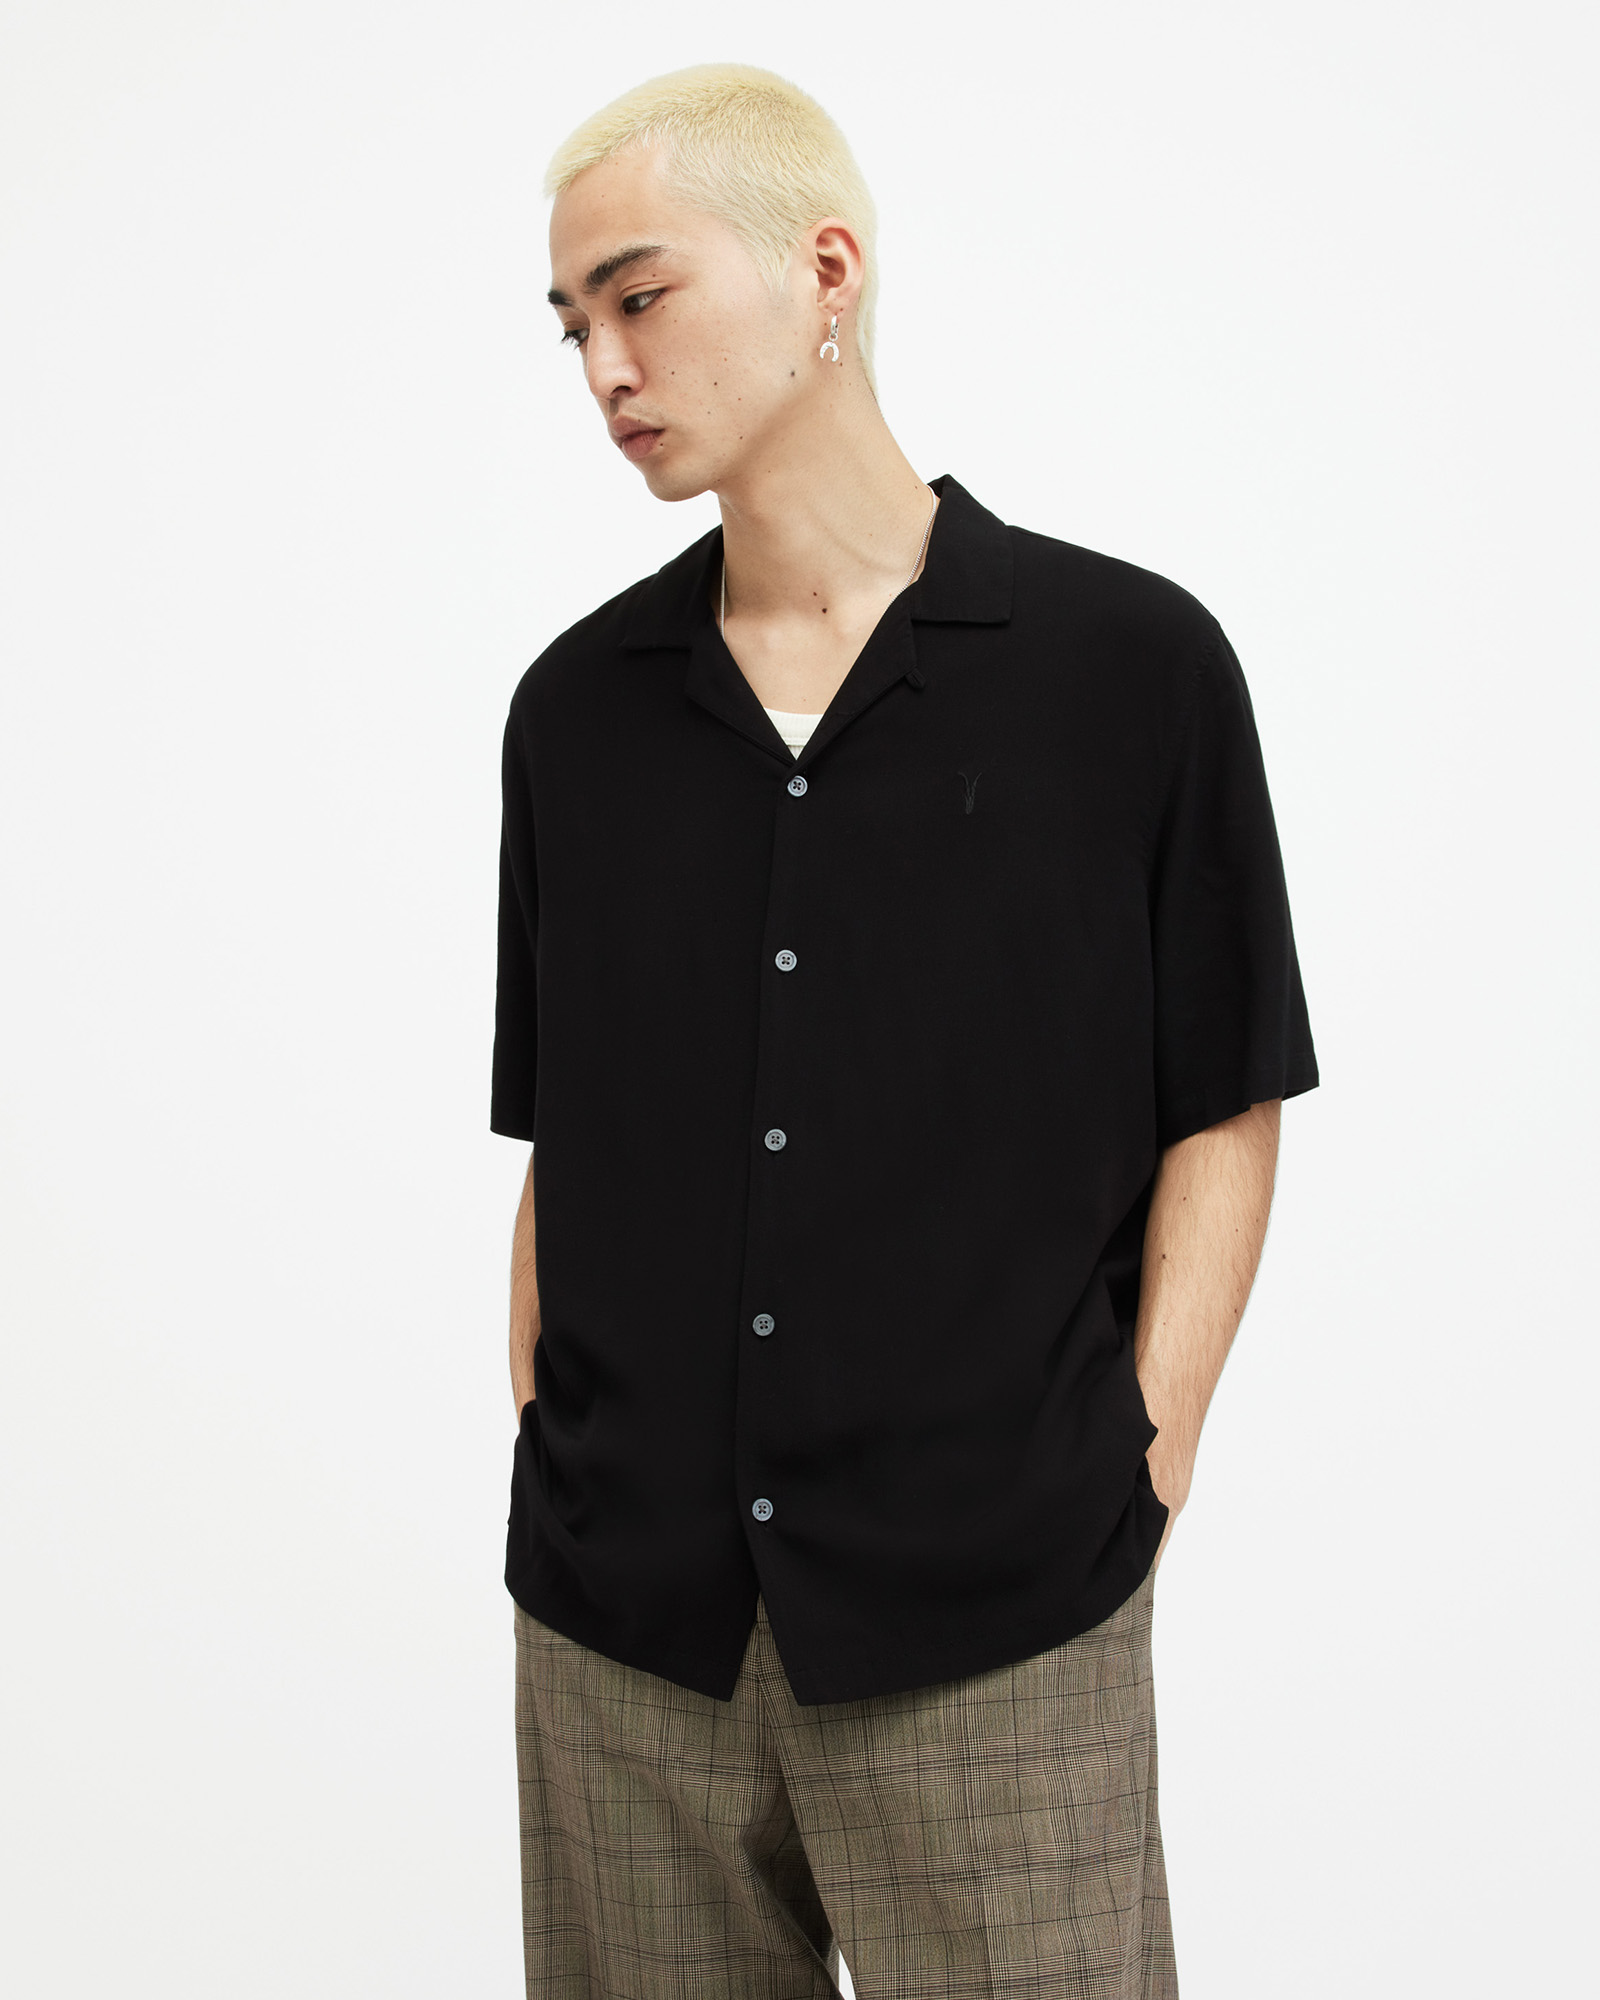 AllSaints Size: XS Men's Venice Ramskull Shirt, Black